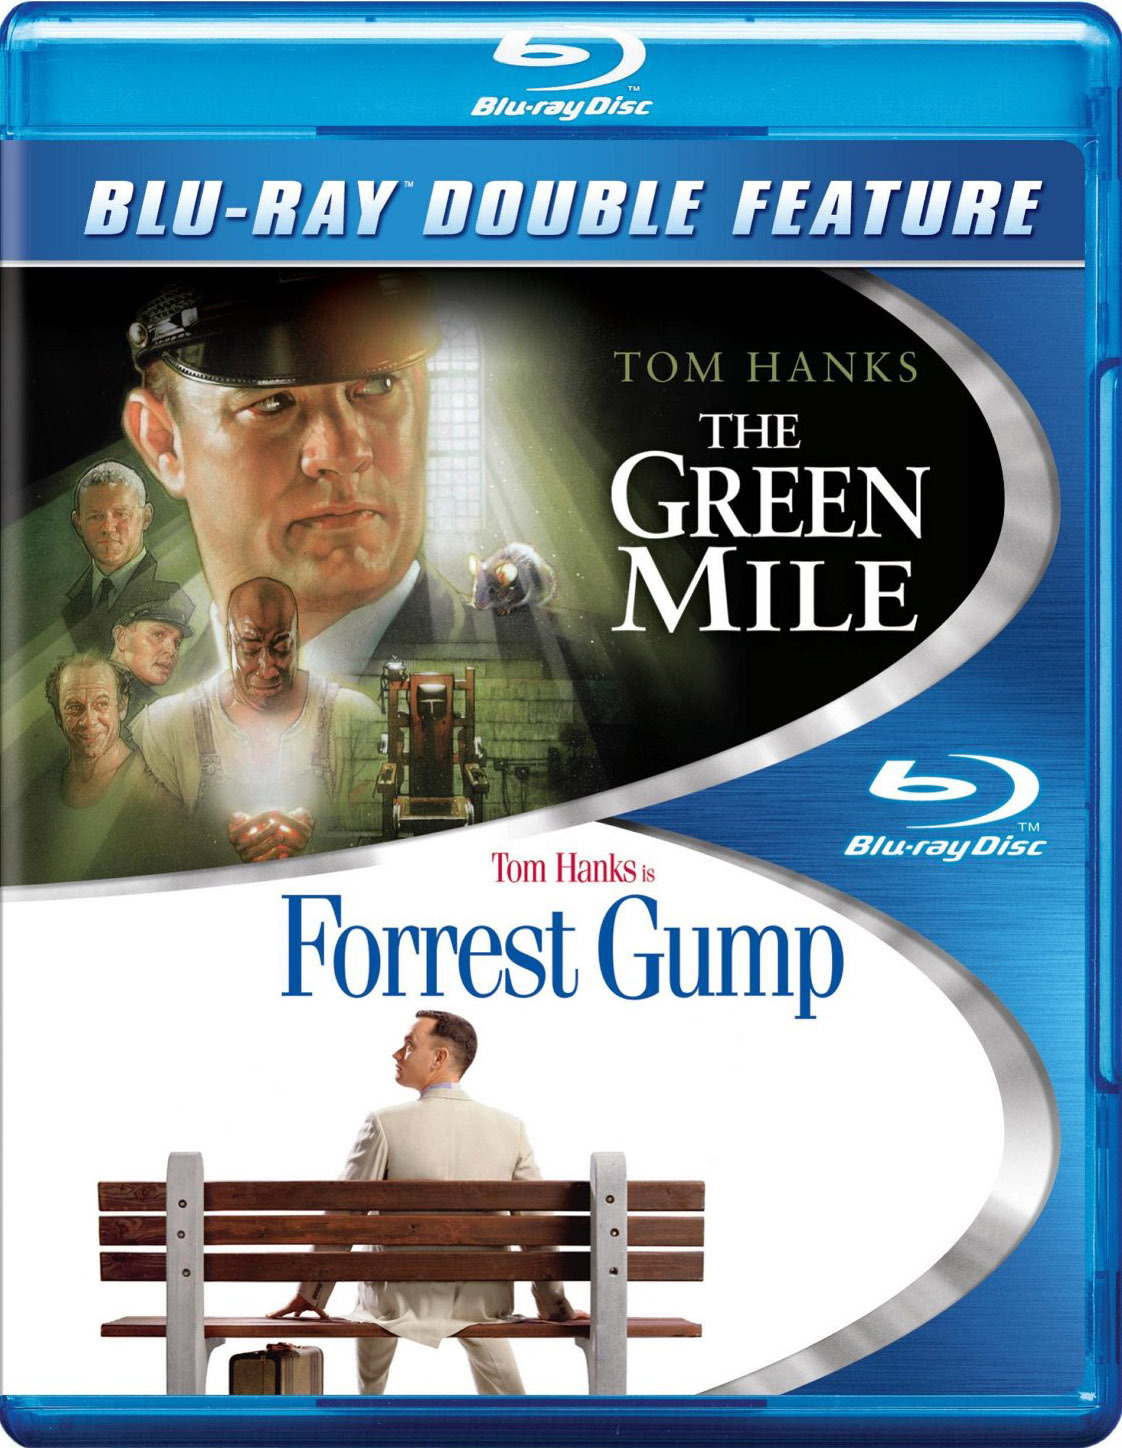 Forrest Gump & The Green Mile